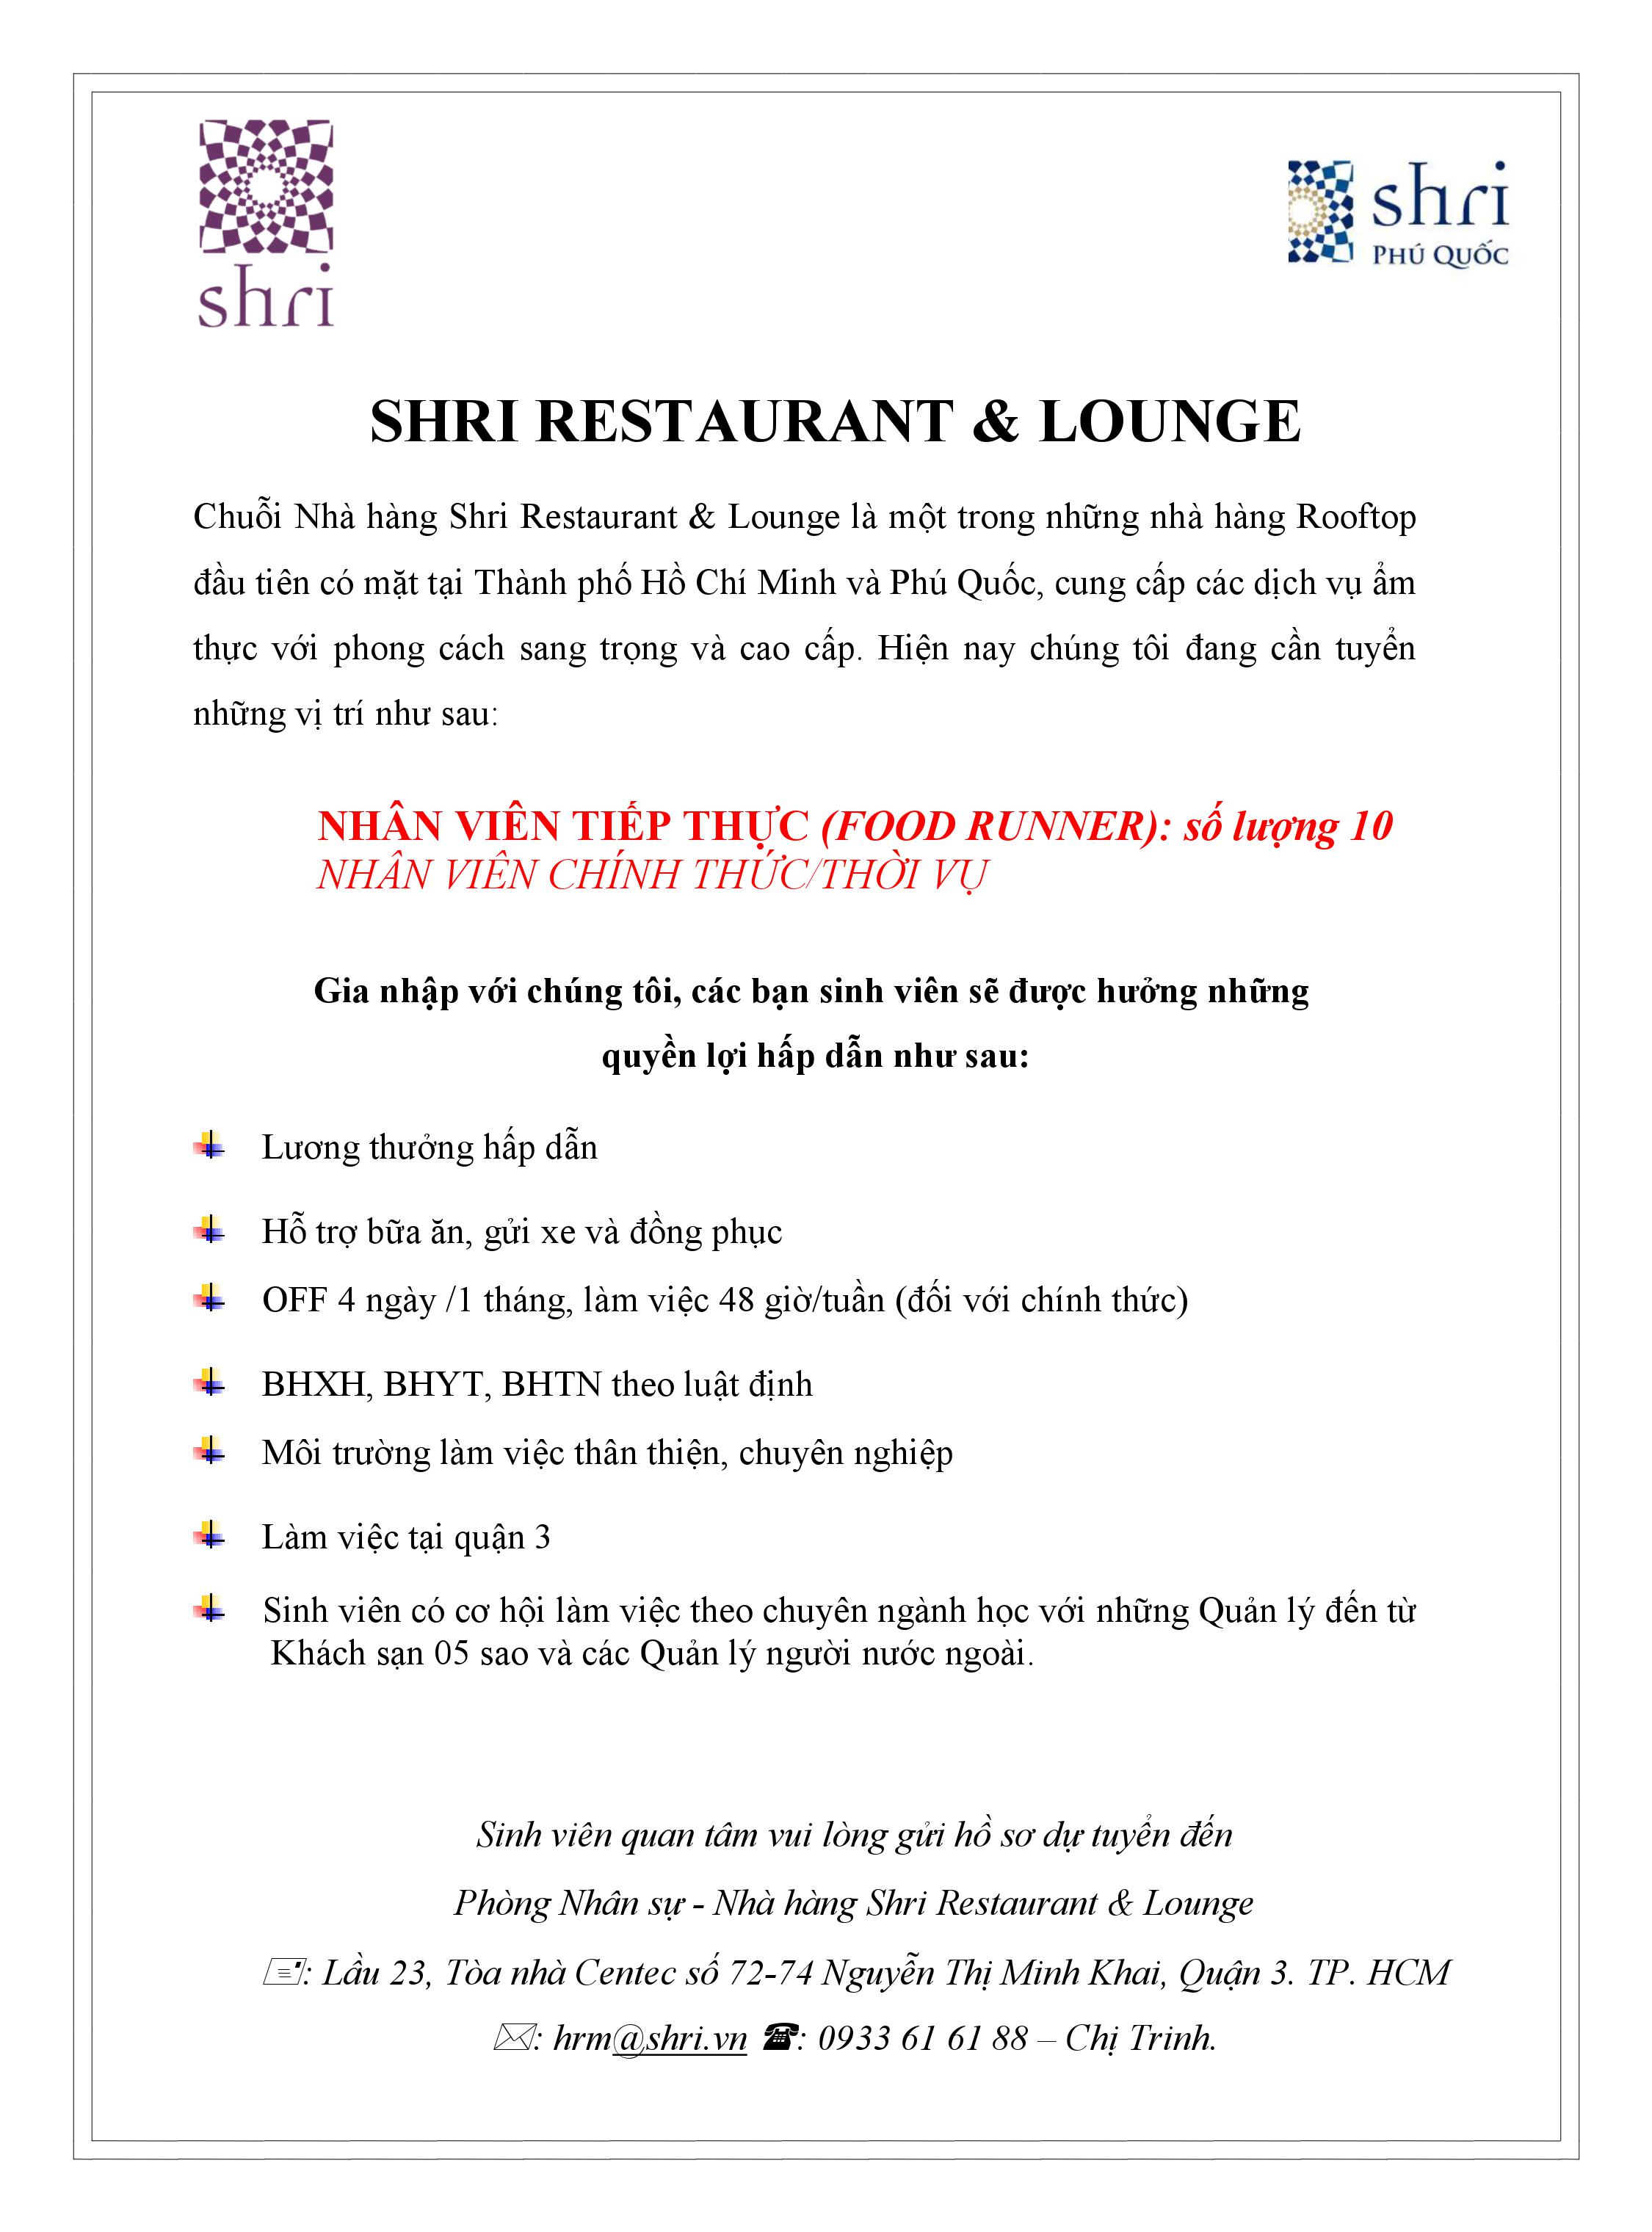 Shri Restaurant & Lounge tuyển dụng 2